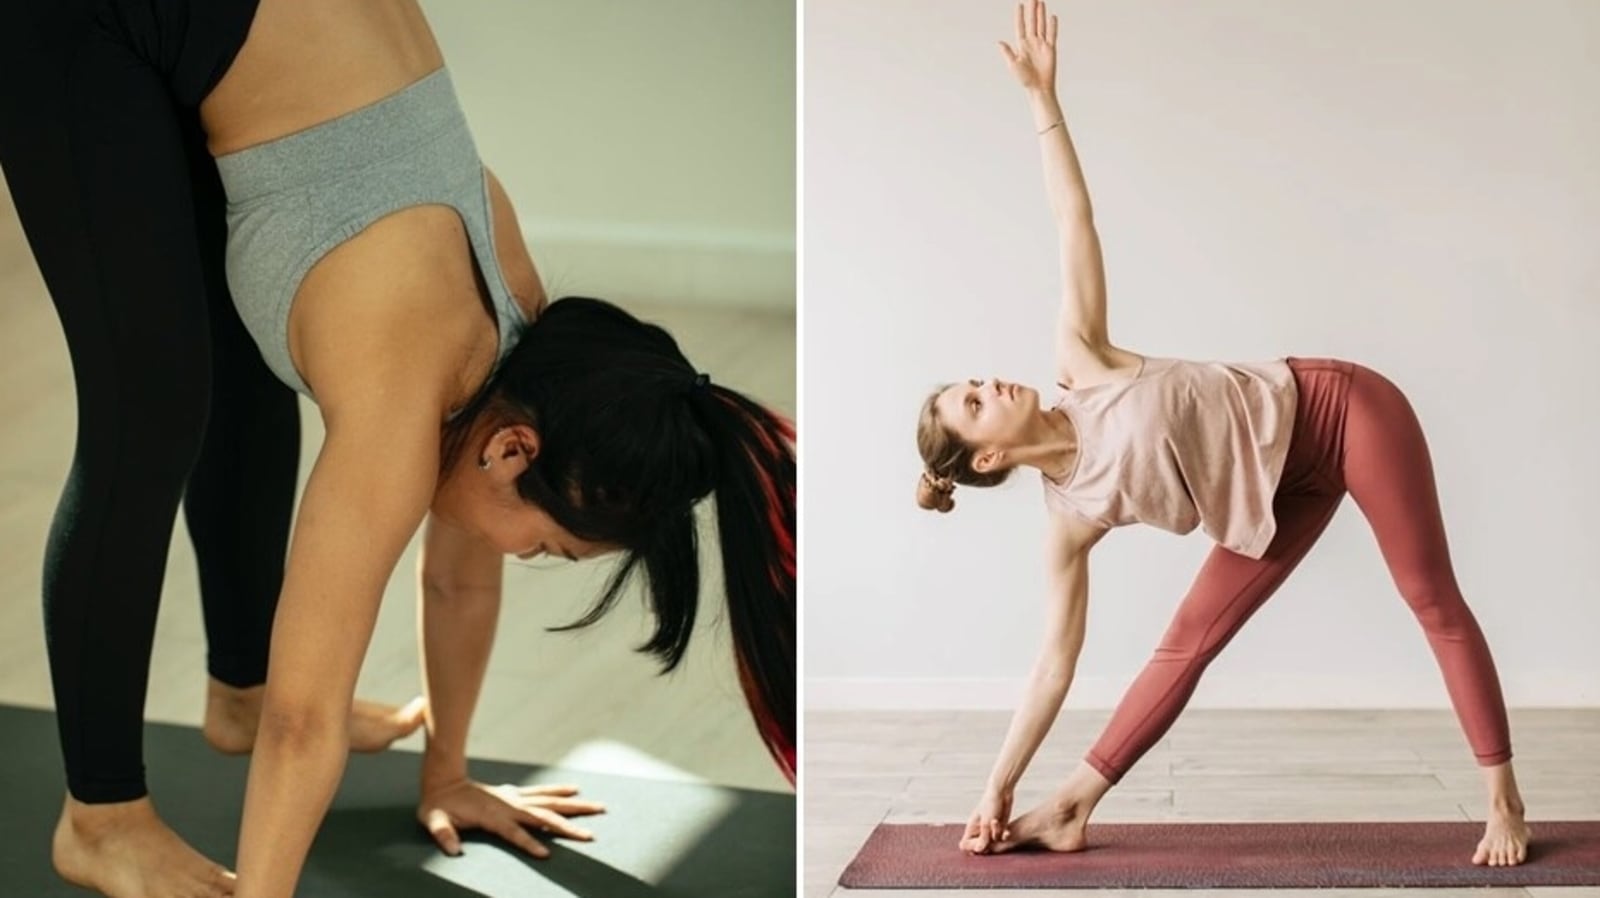 Premium Photo  Triangle pose 1 yoga posture asana